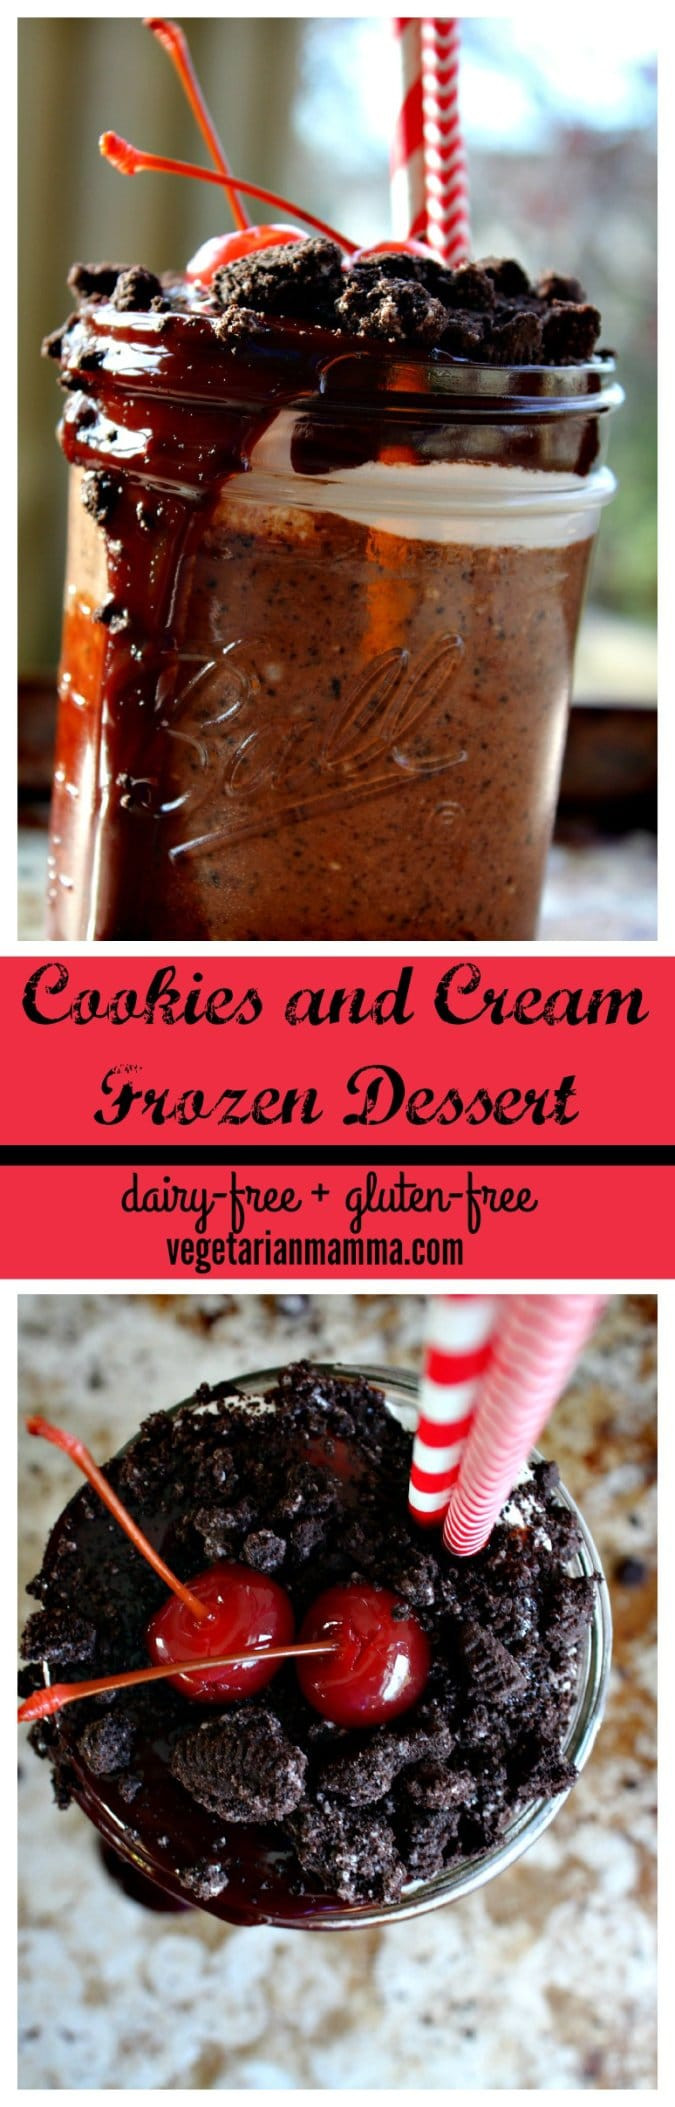 Dairy Free Frozen Desserts
 Cookies and Cream Frozen Dessert An After School Treat